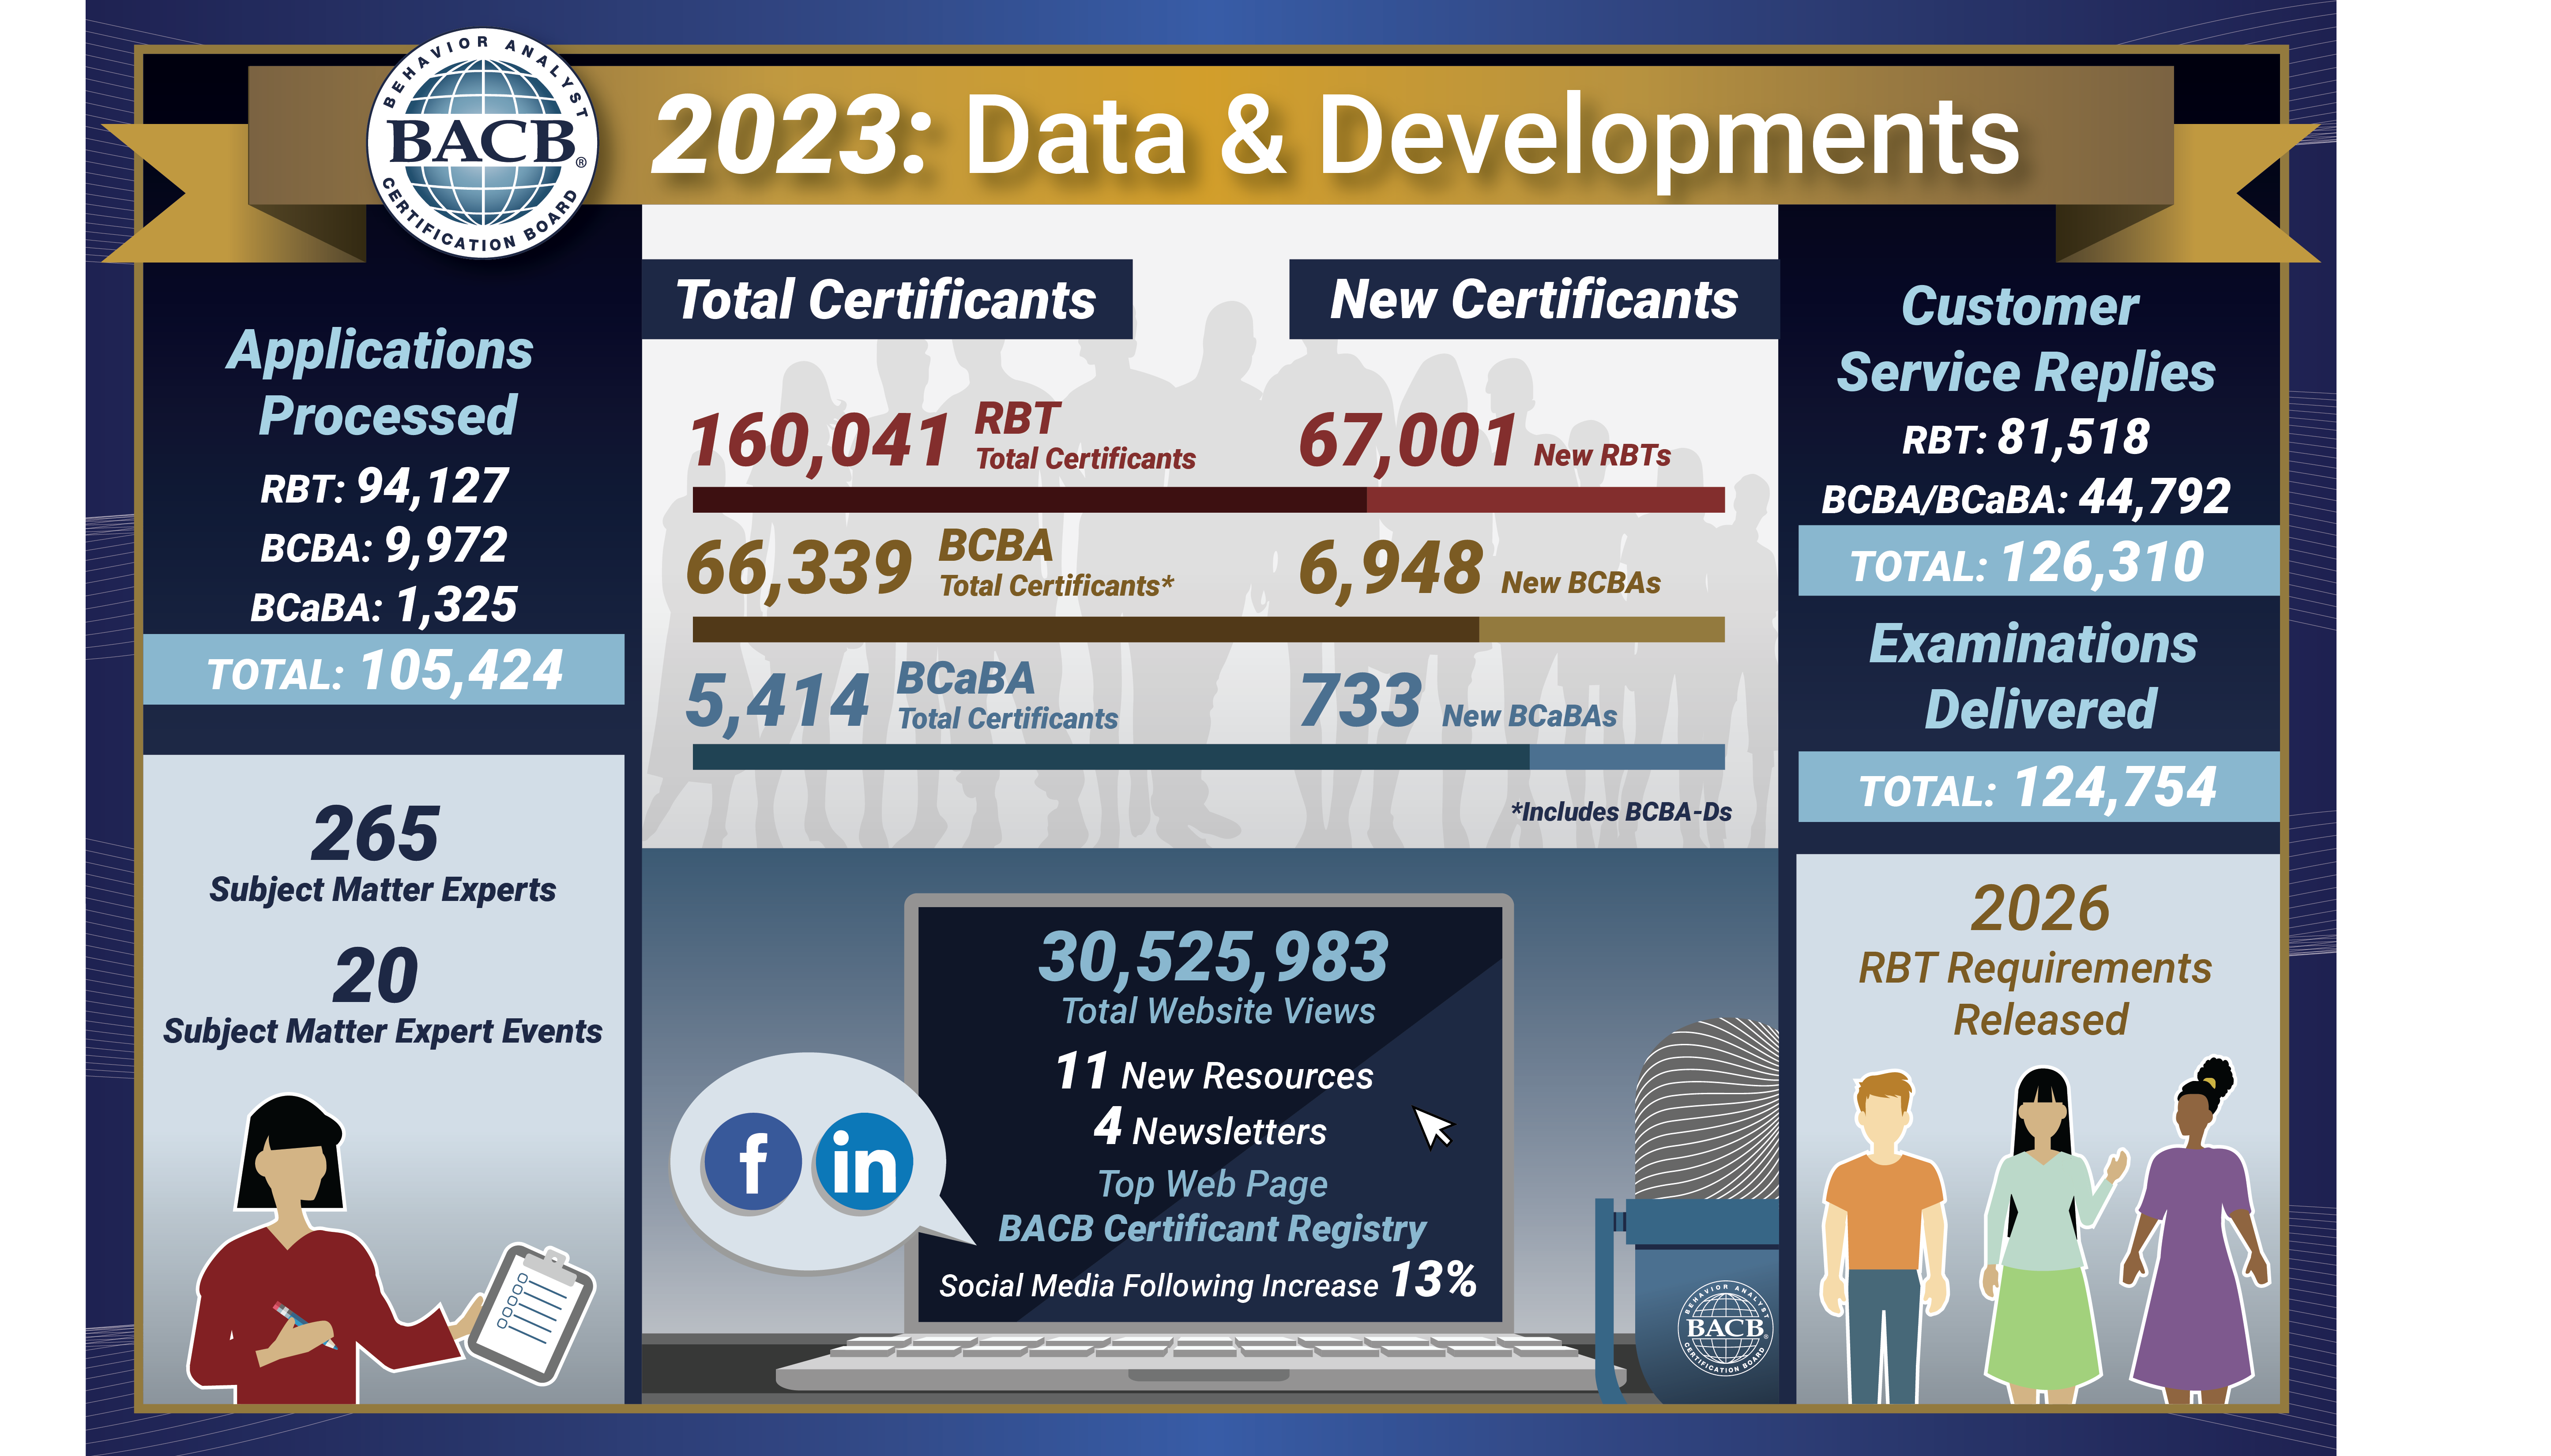 2023 Data and Developments image